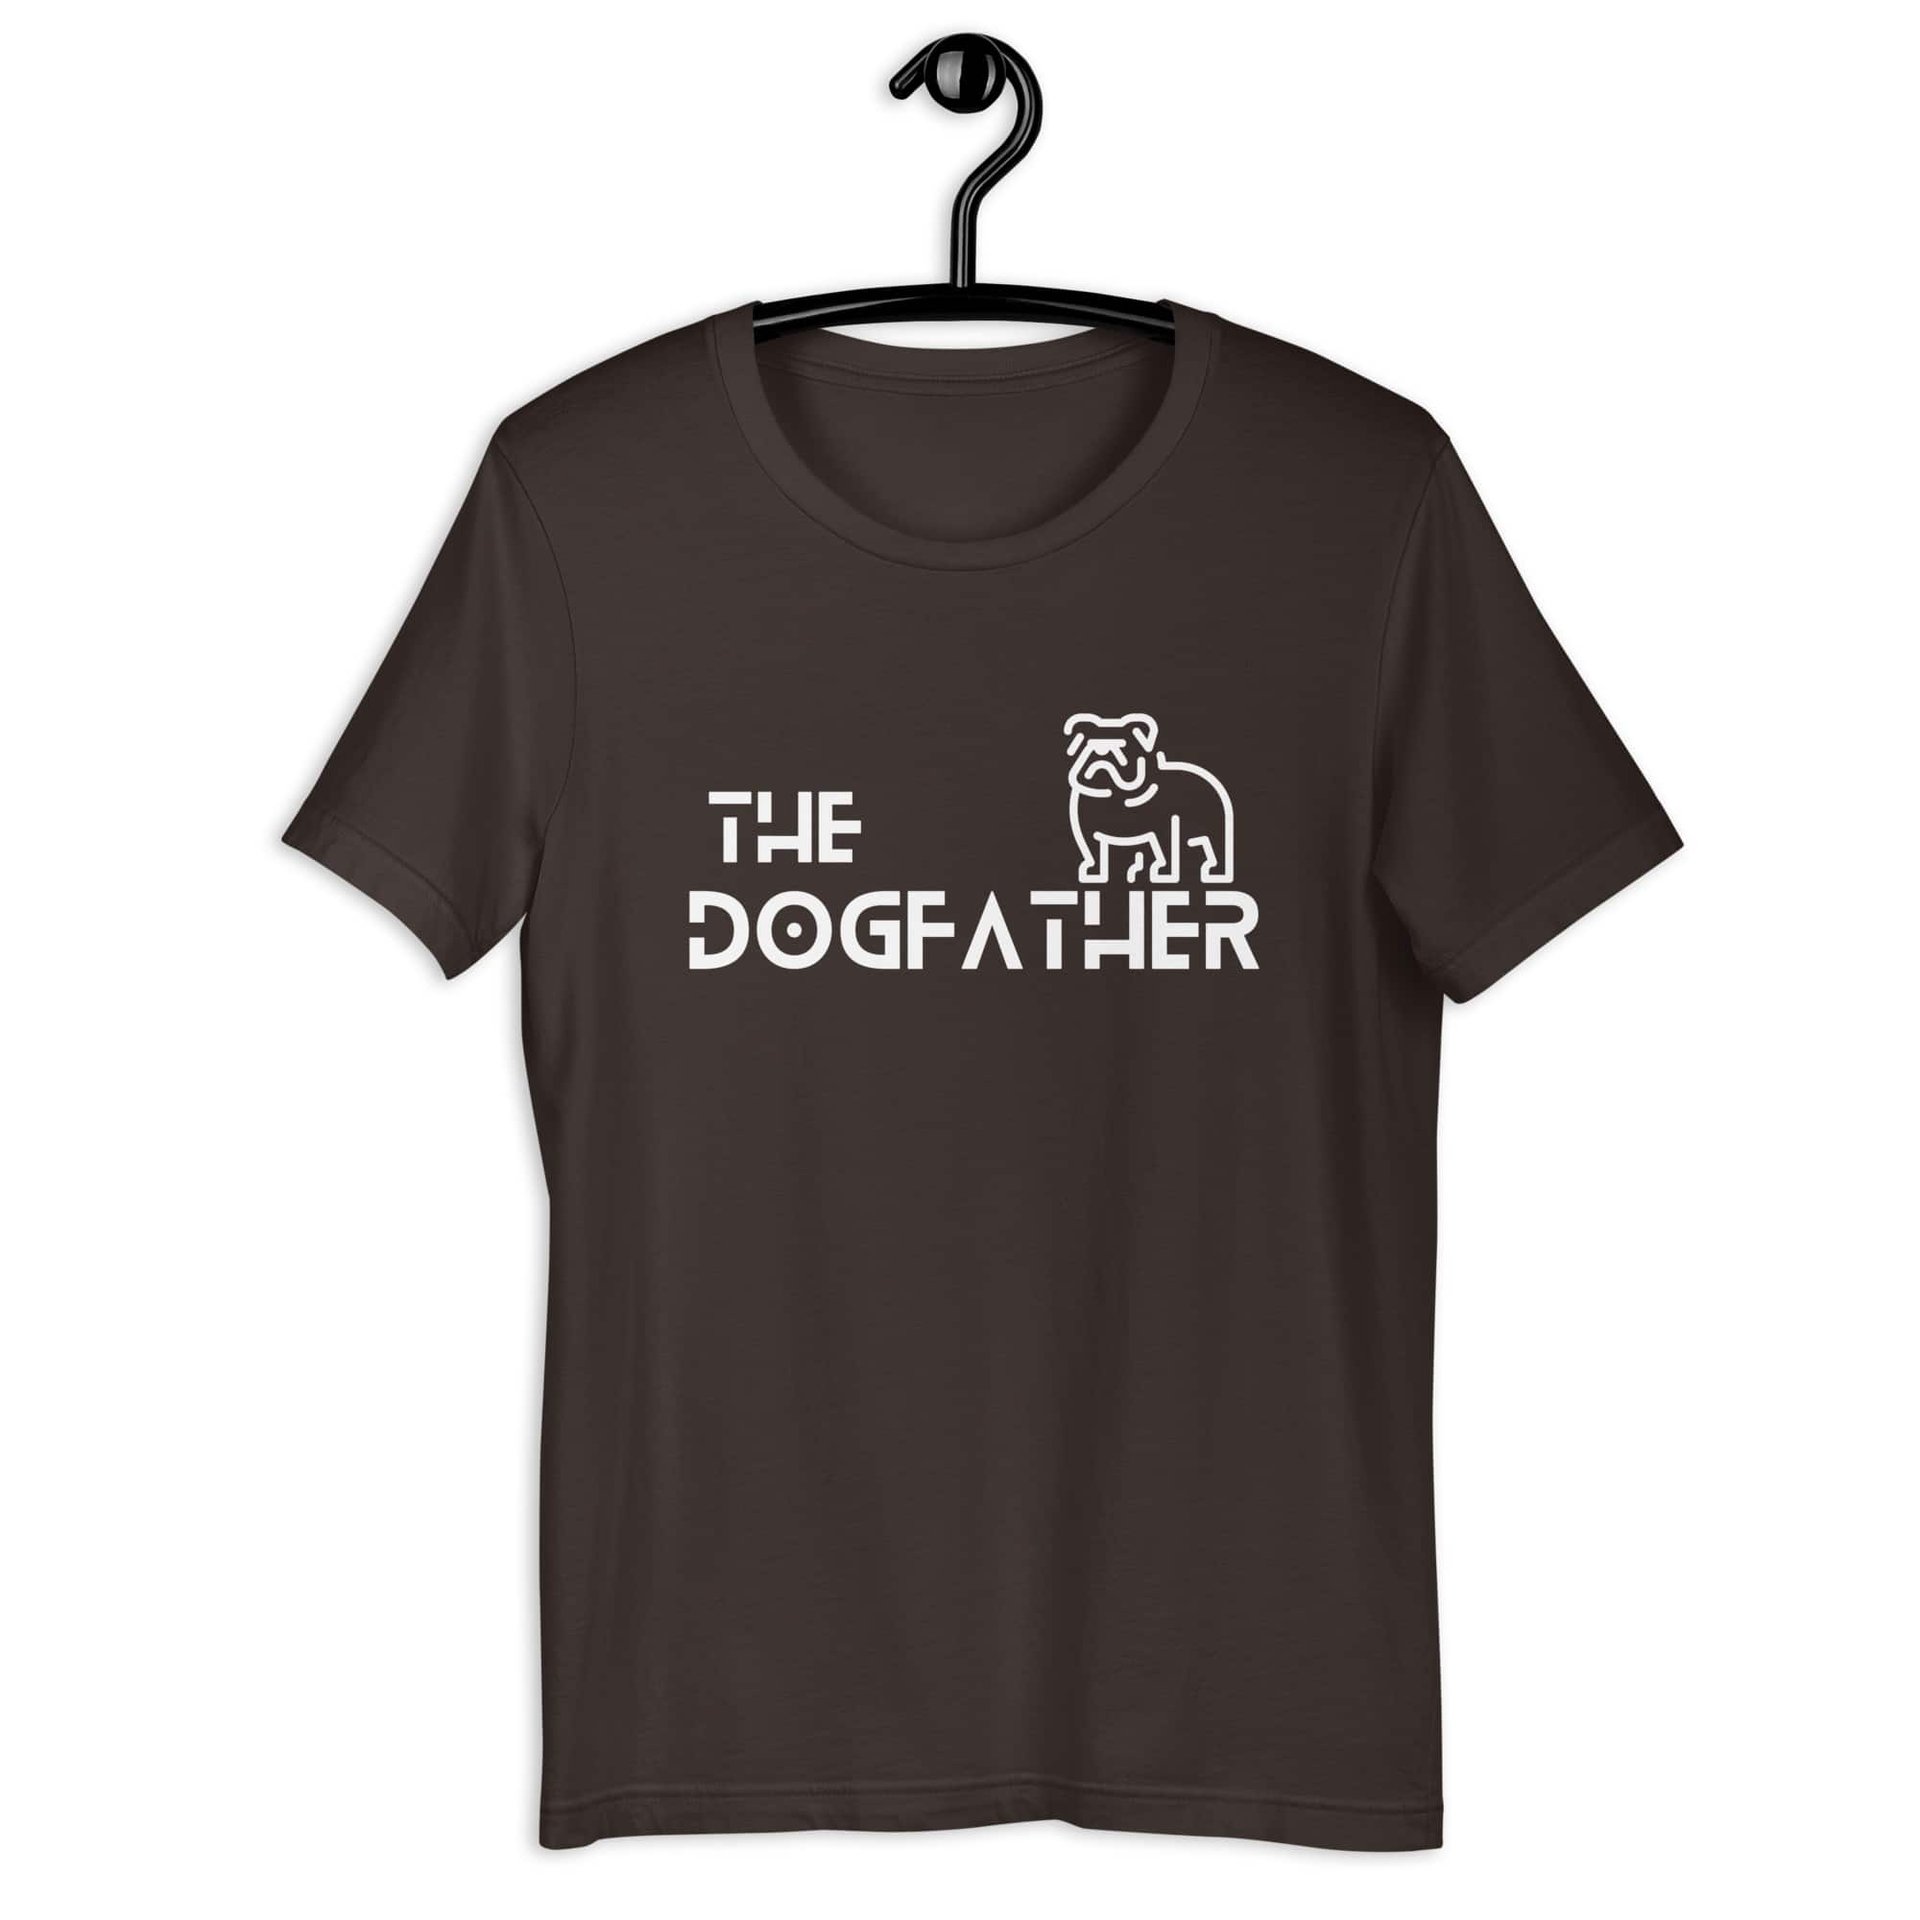 The Dogfather Bulldog Unisex T-Shirt. Brown